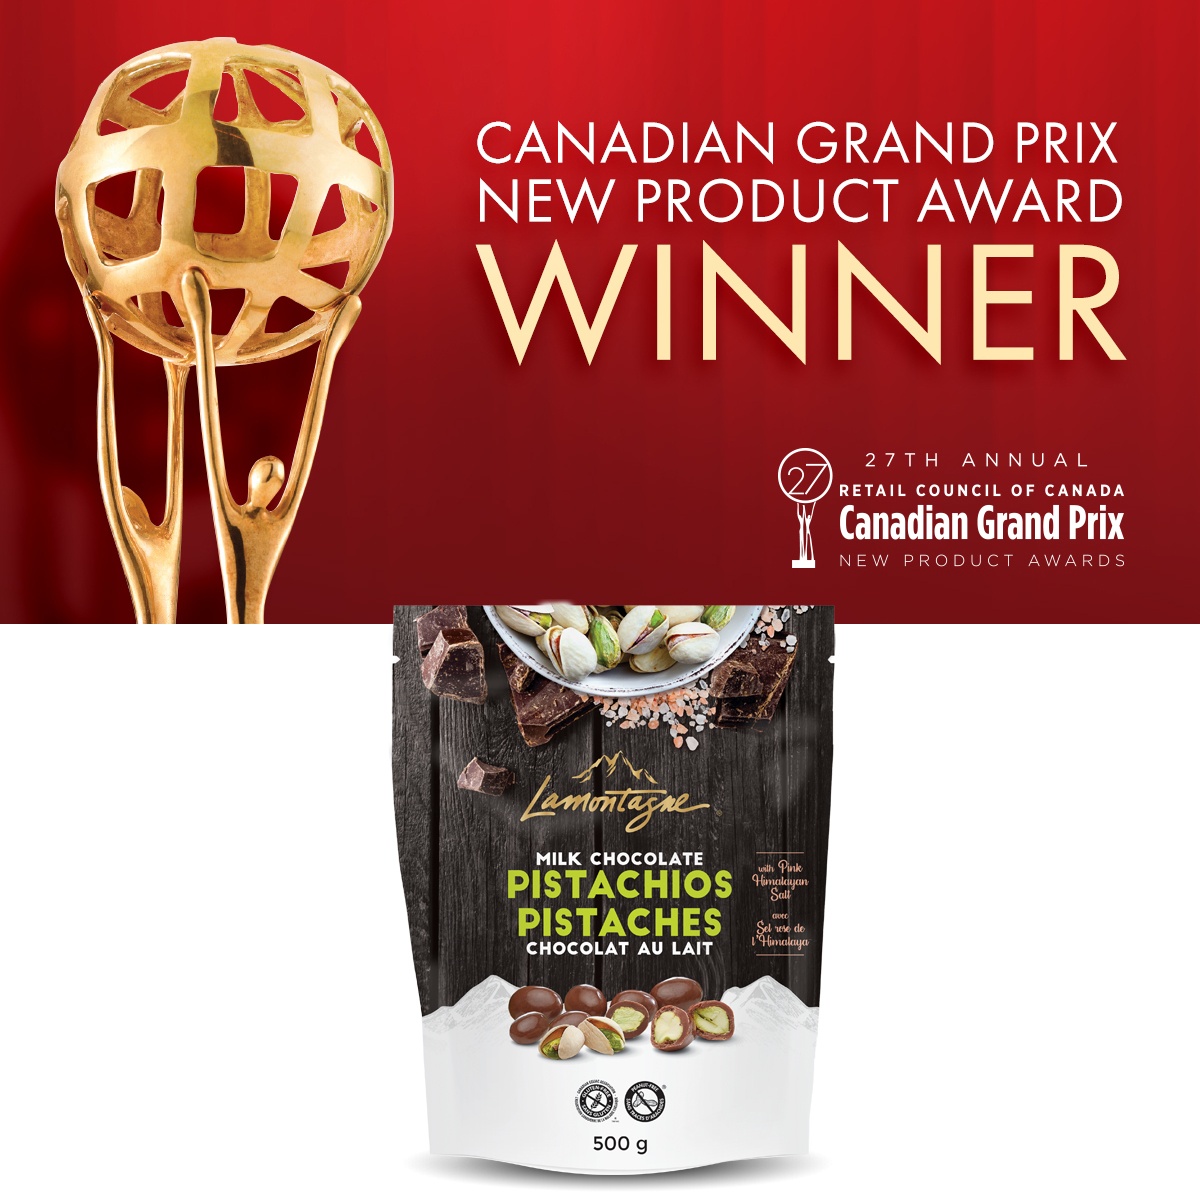 Canadian grand prix new product award winner